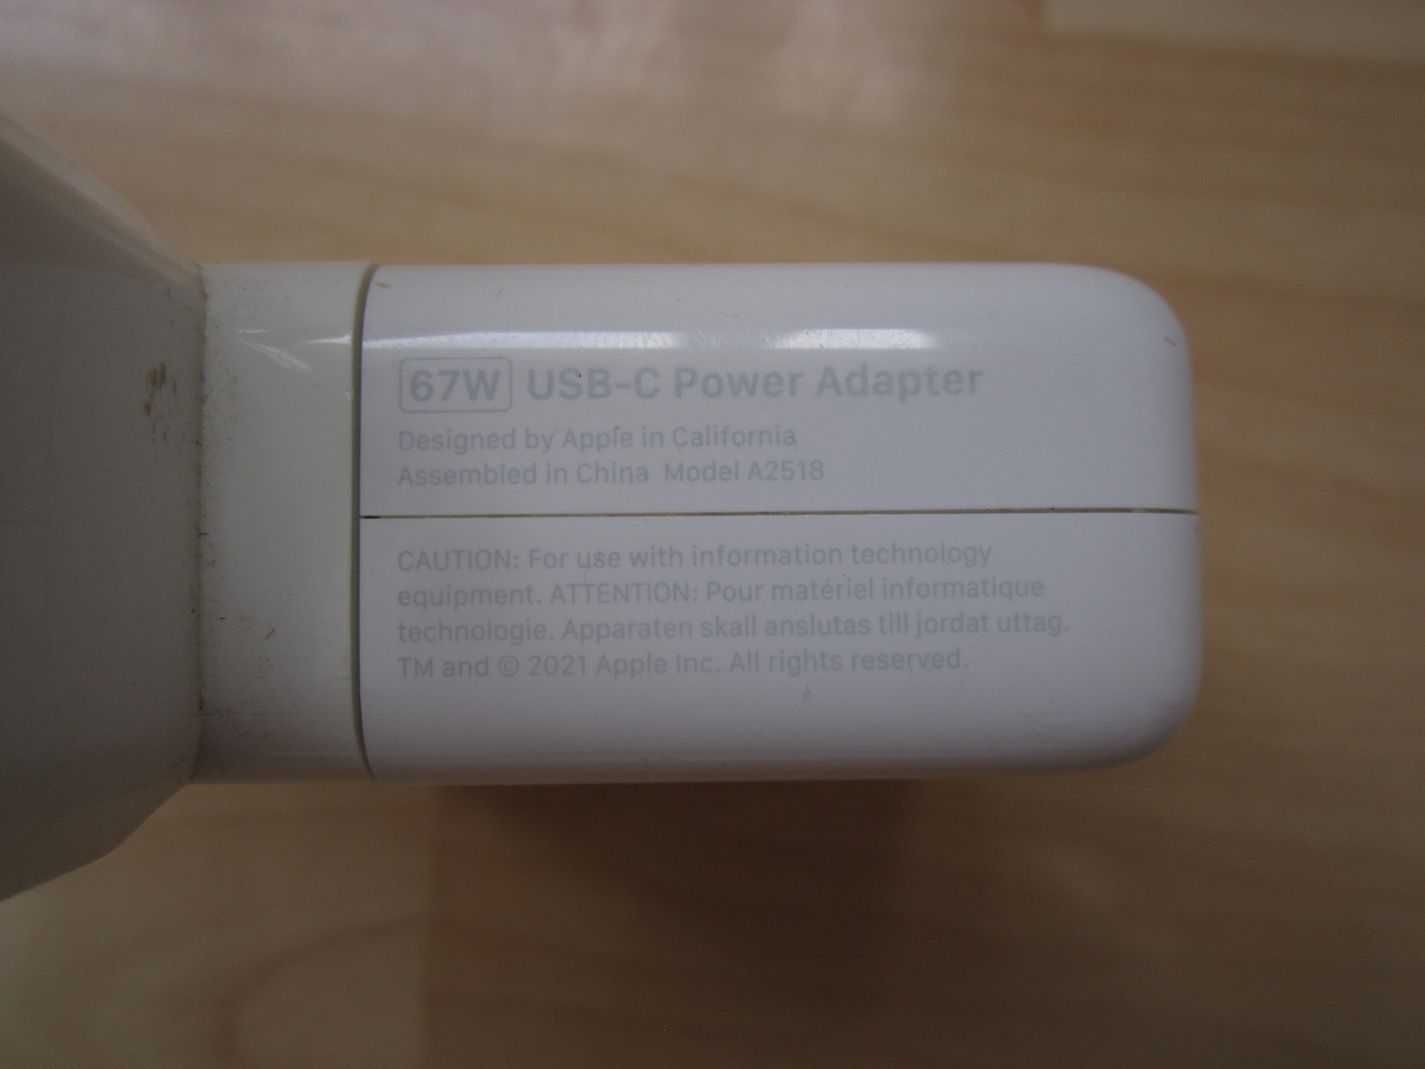 Apple 67W USB Type-C Power Adapter - за ремонт или части